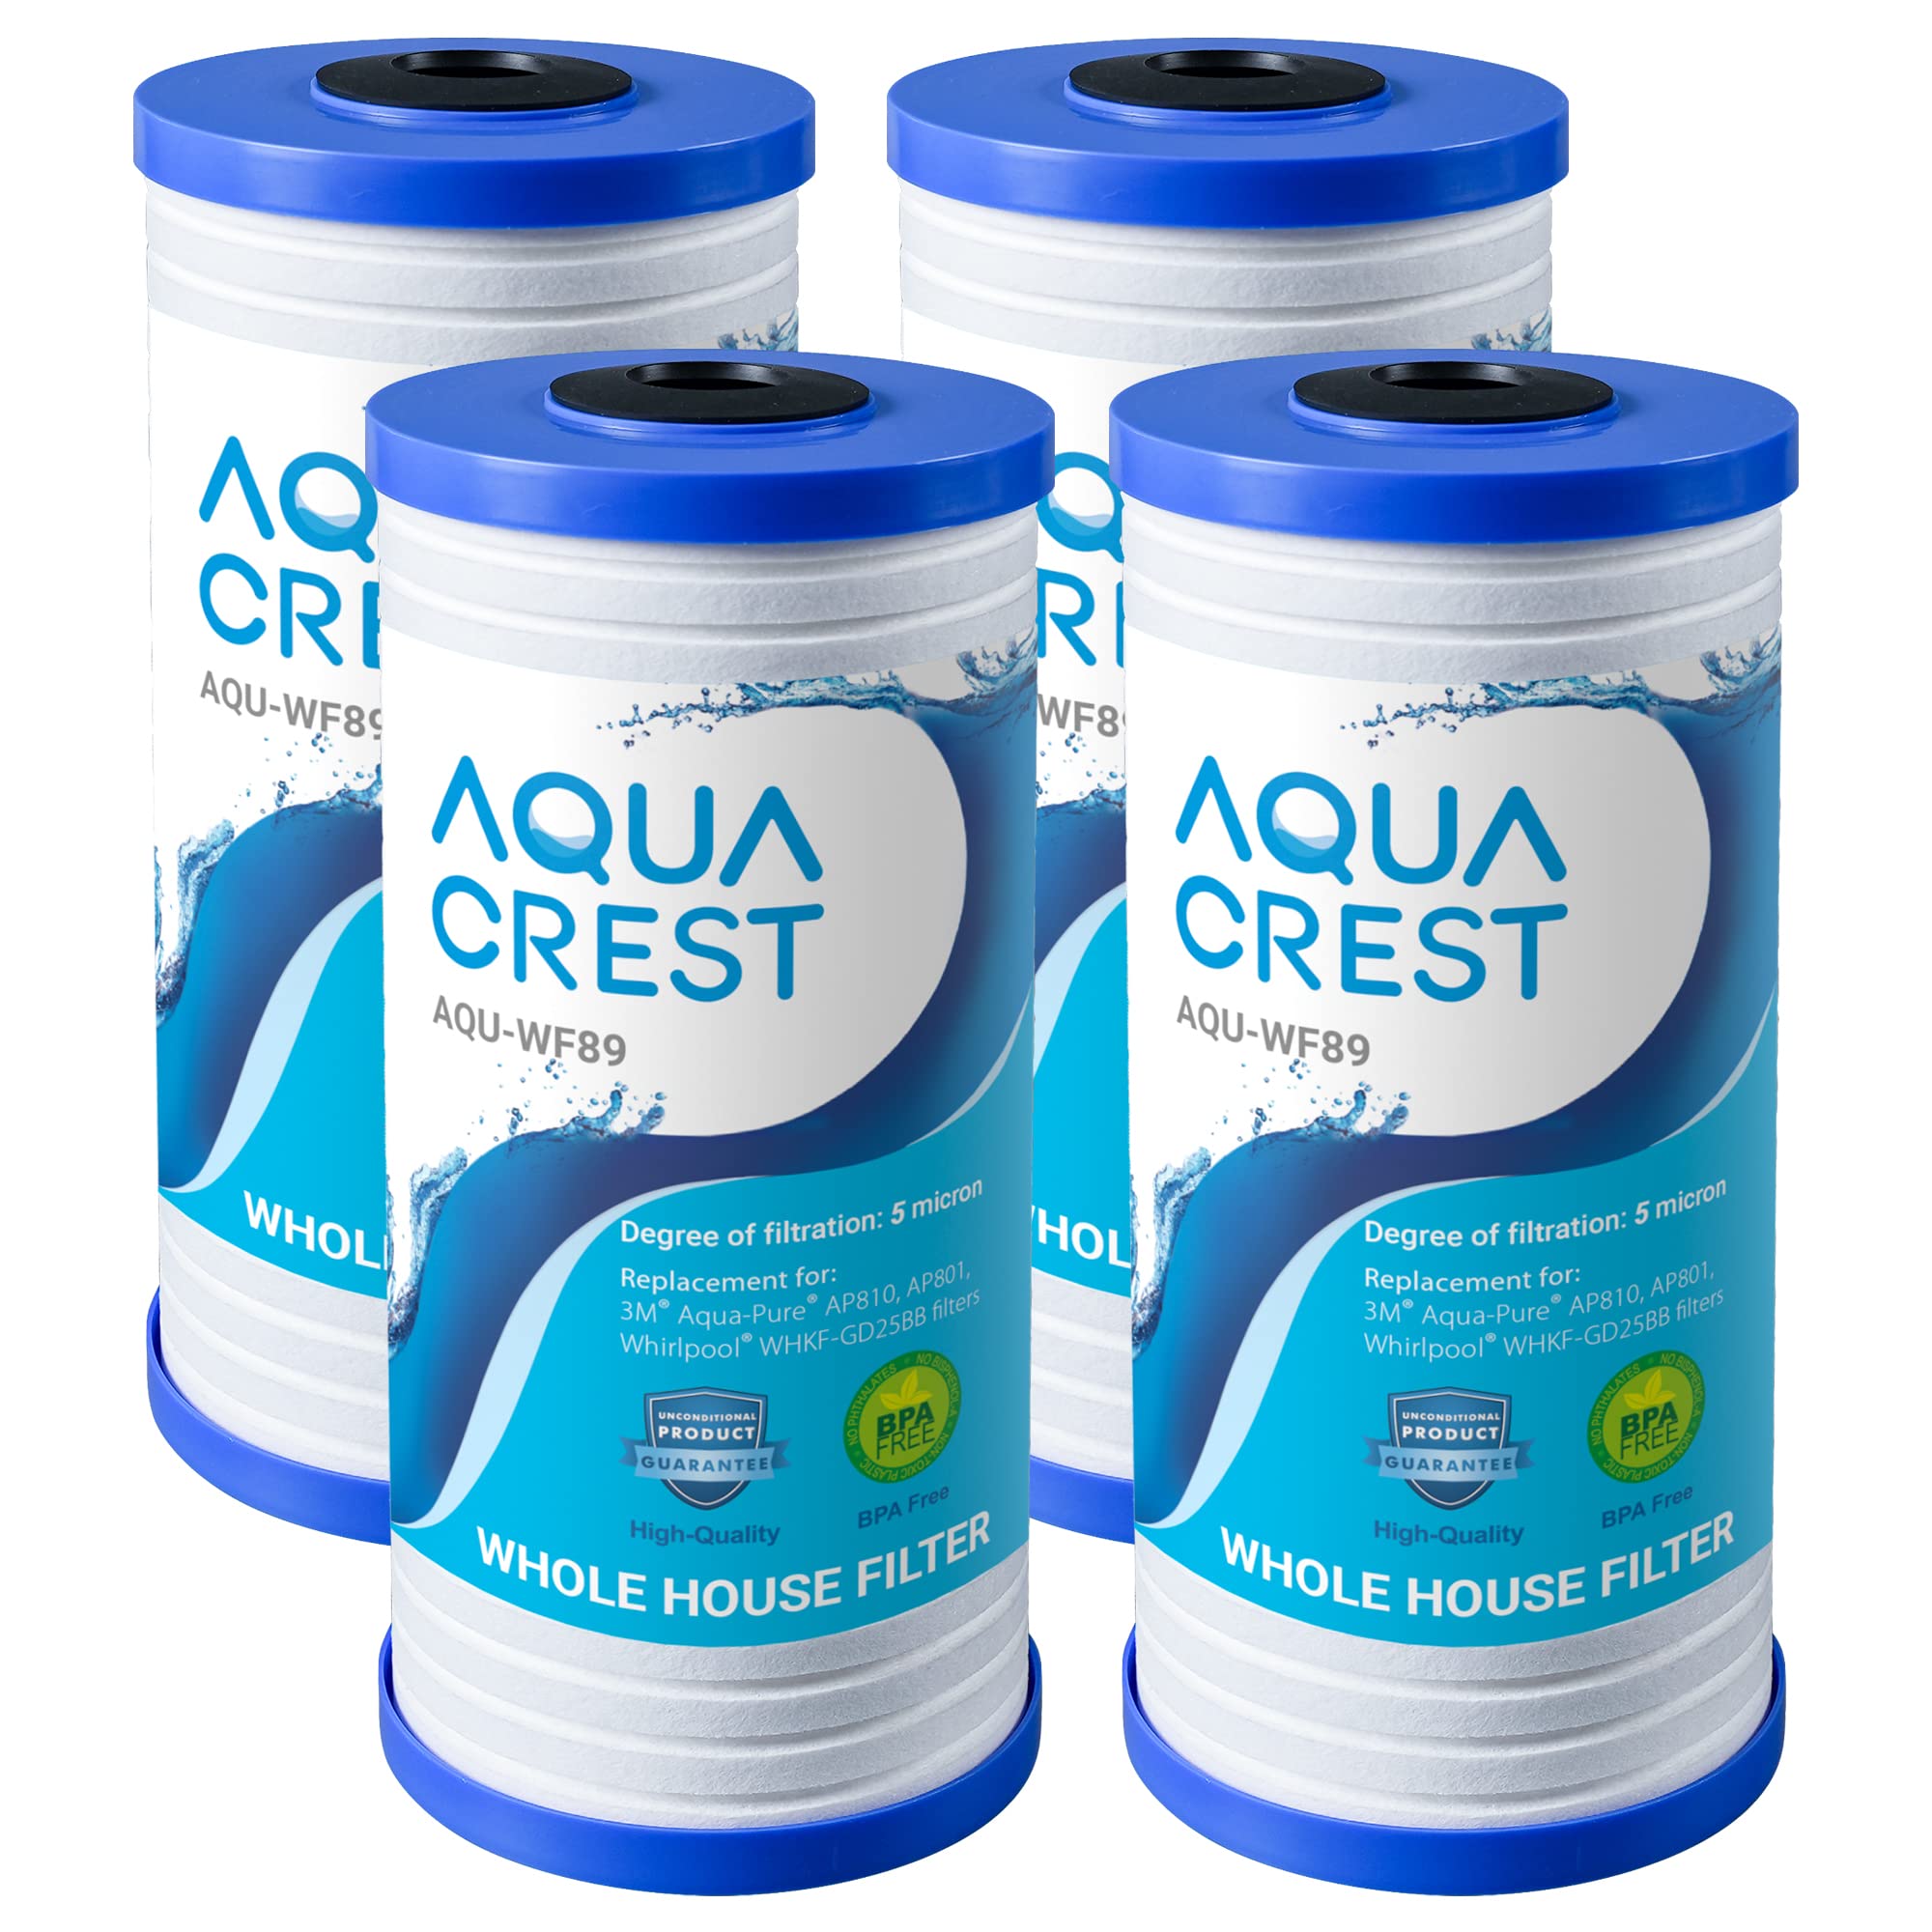 AQUA CREST AQU-WF89 Aquacrest Ap810 Whole House Water Filter, Replacement  For 3M Aqua-Pure Ap810, Ap801, Ap811, Whirlpool Whkf-Gd25Bb, Whkf-Dwhbb, 5